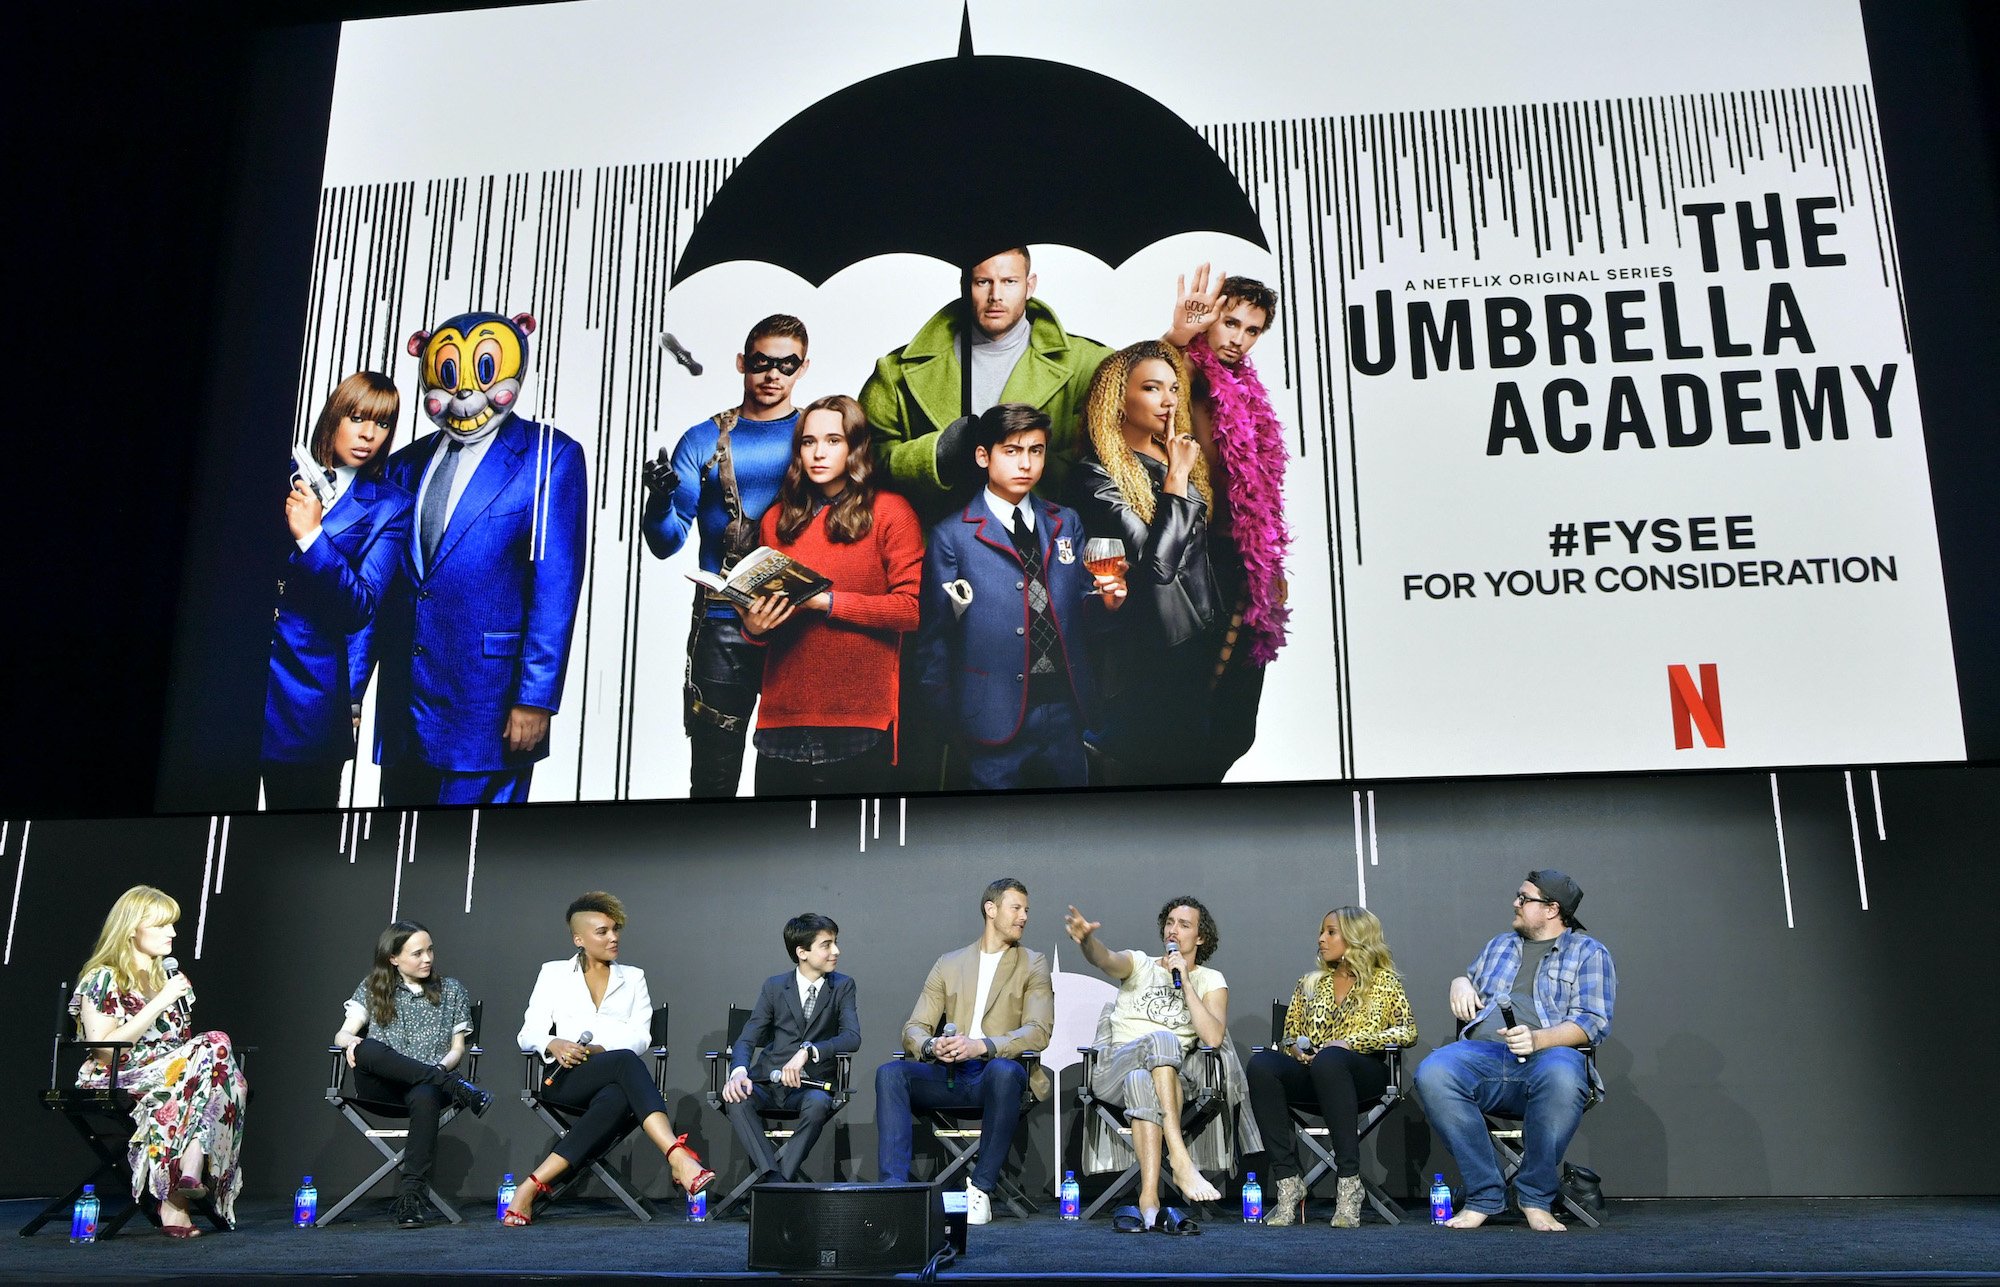 'The Umbrella Academy' setting